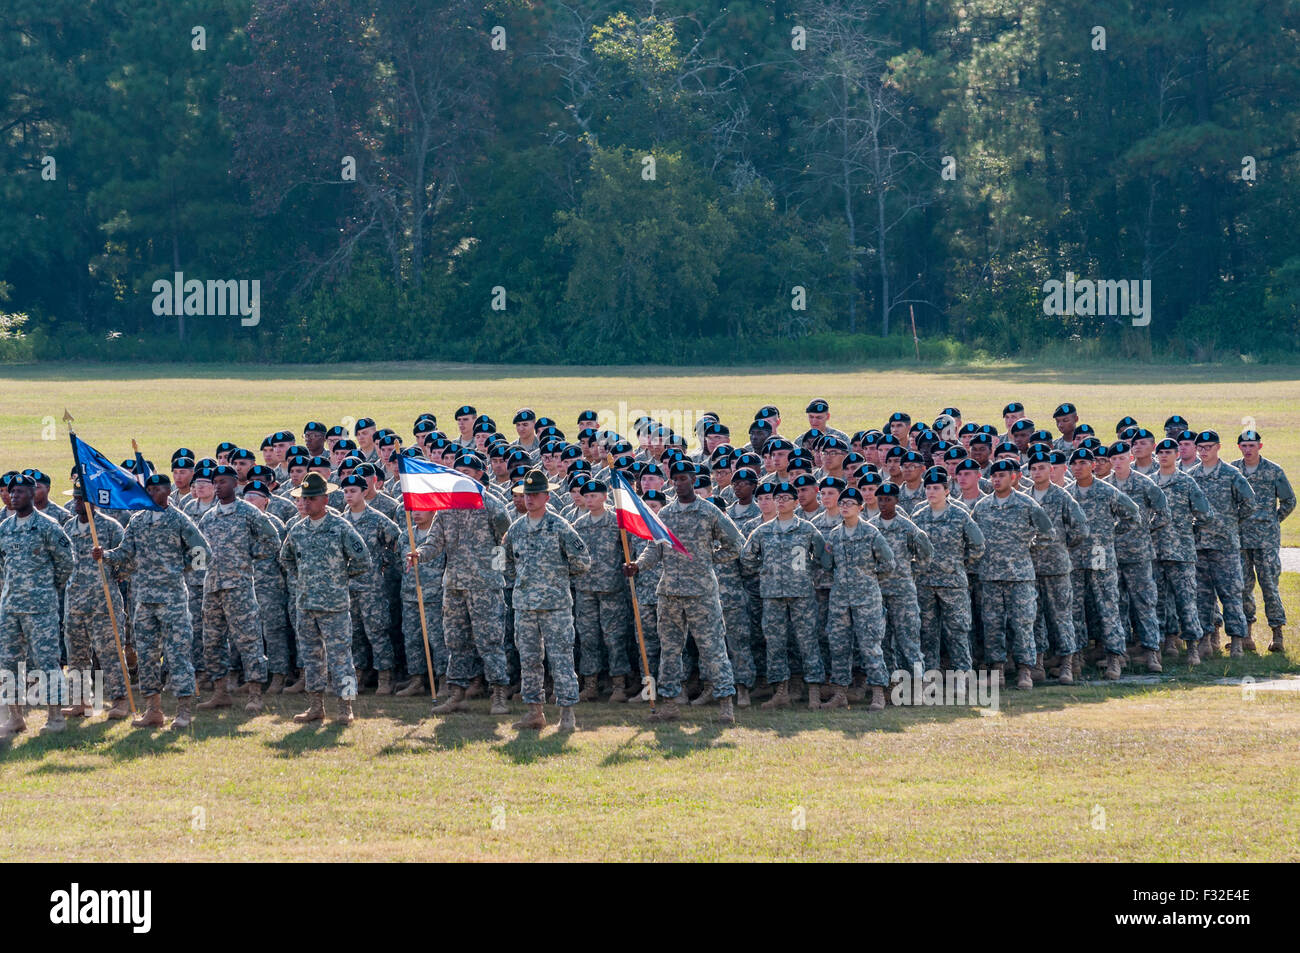 U.S. Army soldiers at basic training graduation ceremony Stock Photo